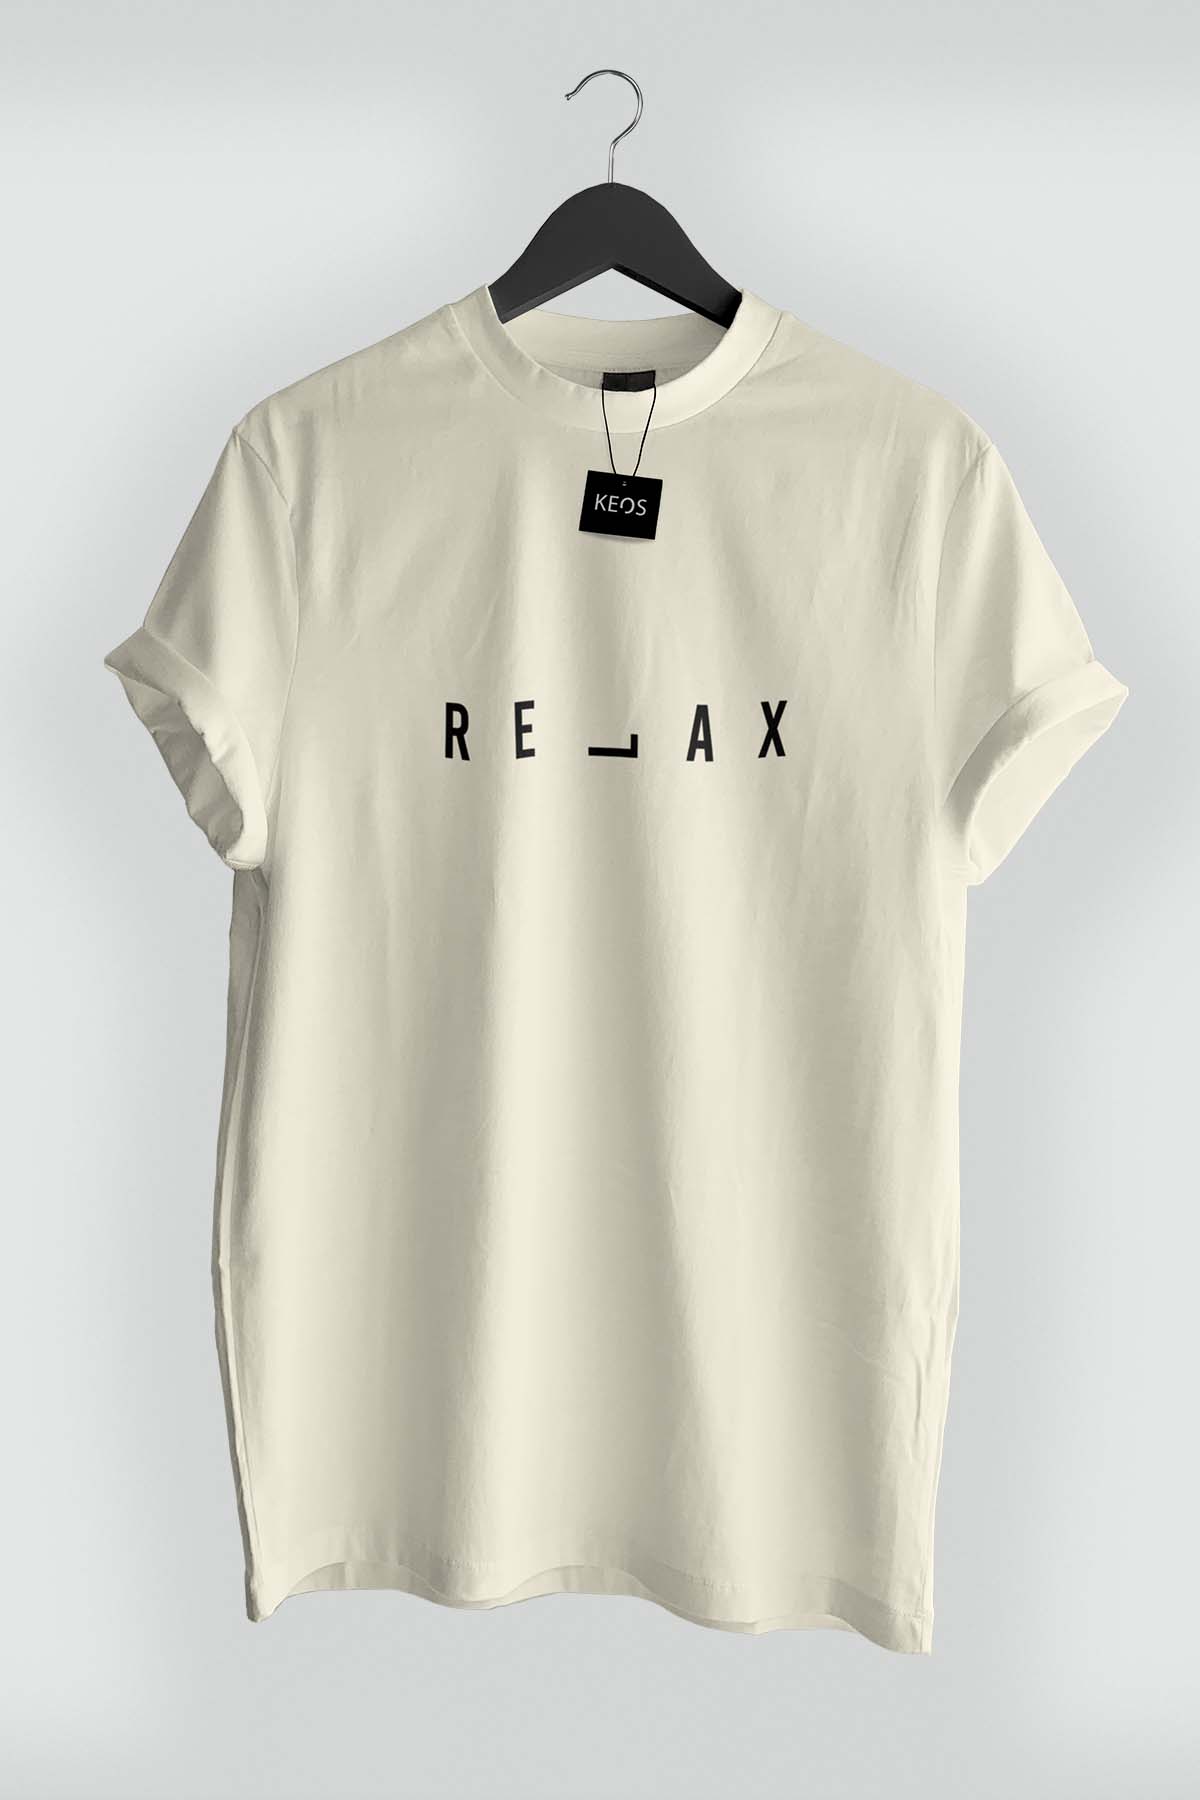 Relax Organic Cotton T-shirt - keos.life